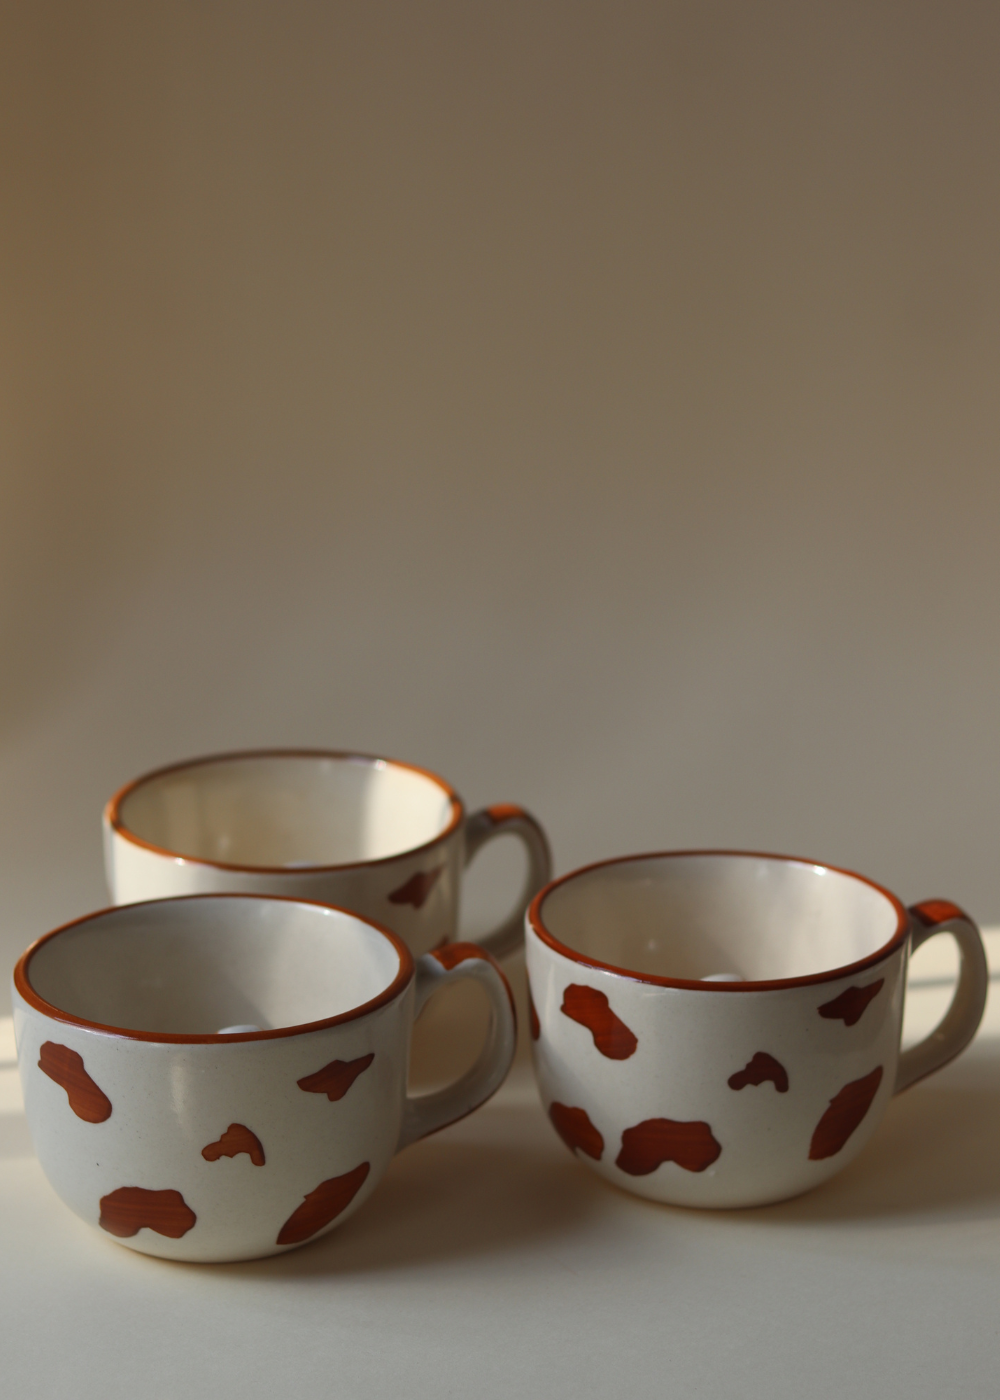 Three ceramic dog mugs